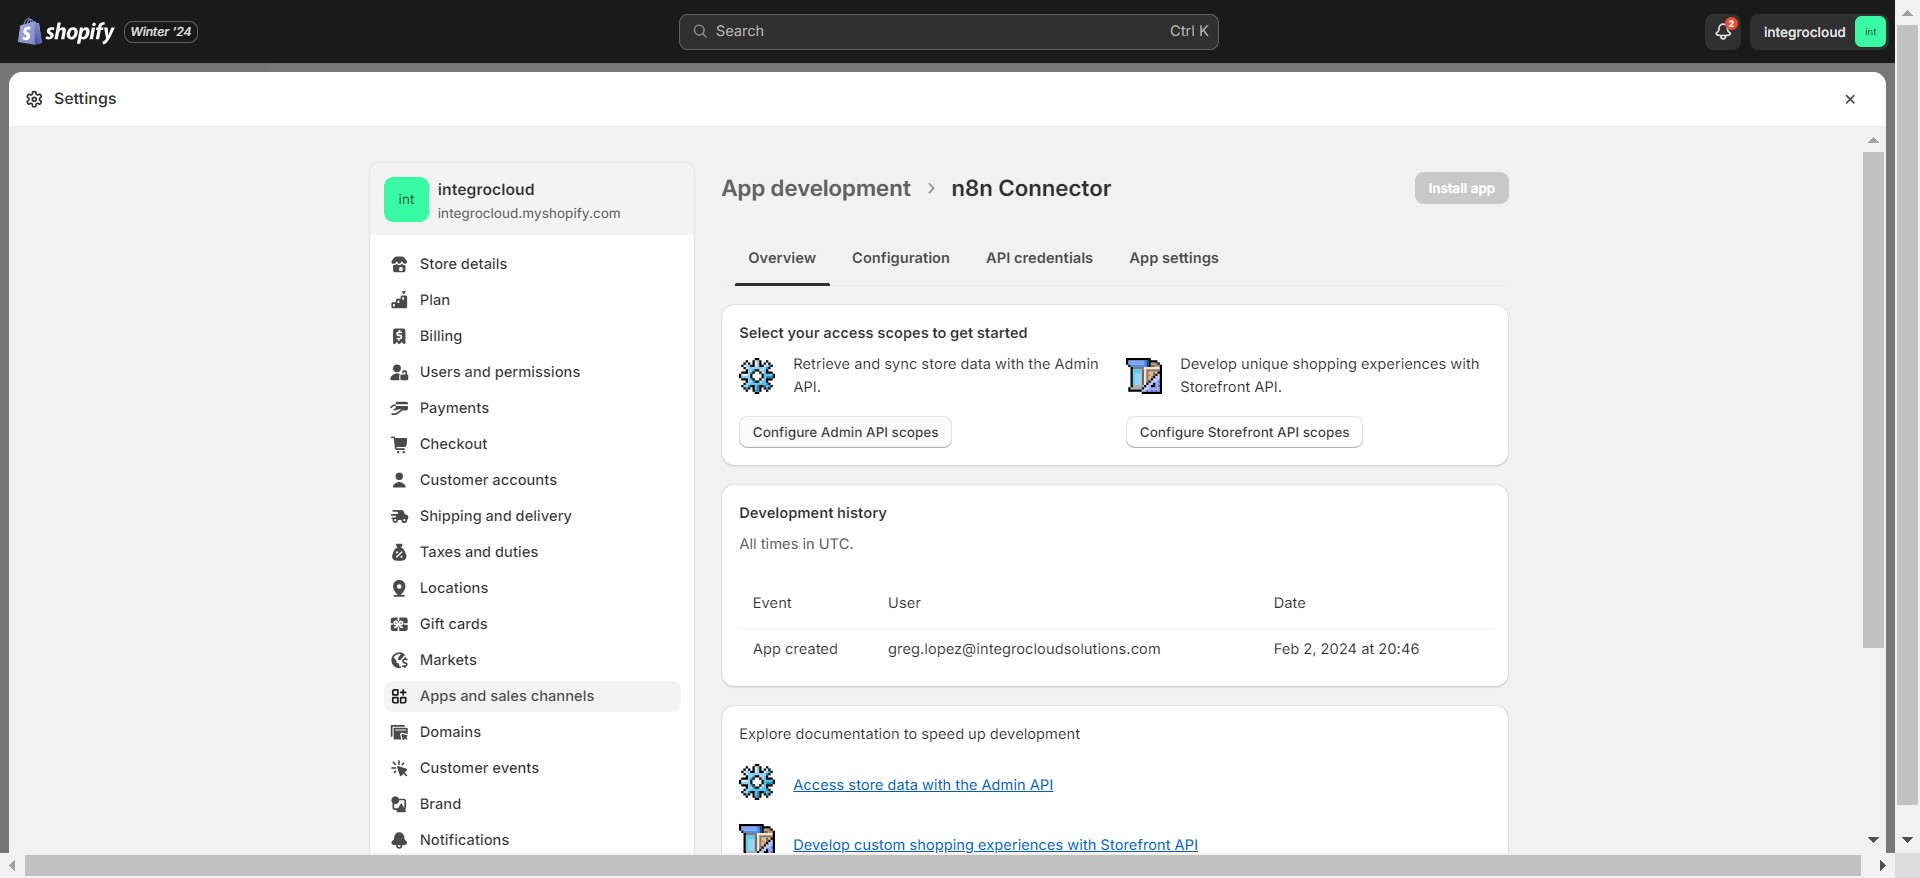 Click on "Configure Admin API scopes"